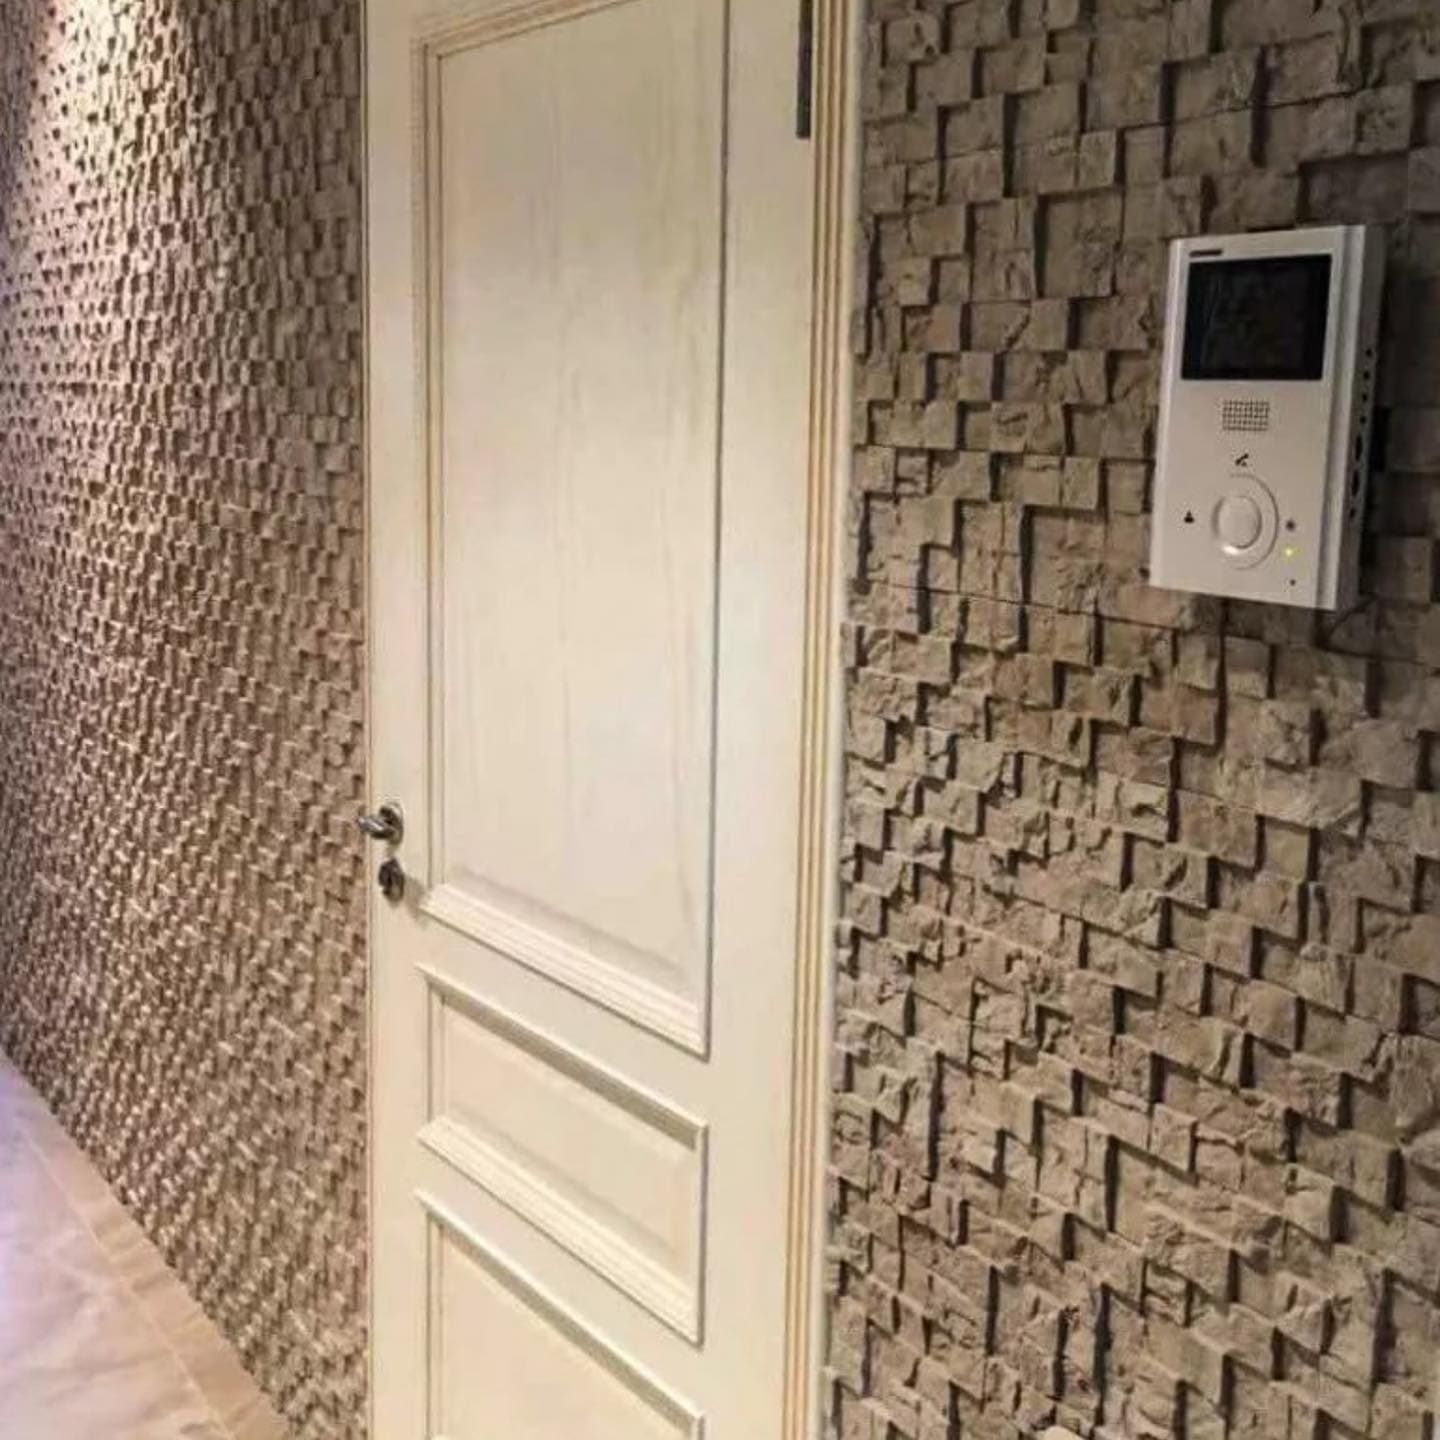 Мозаика в ванной комнате дизайн фото